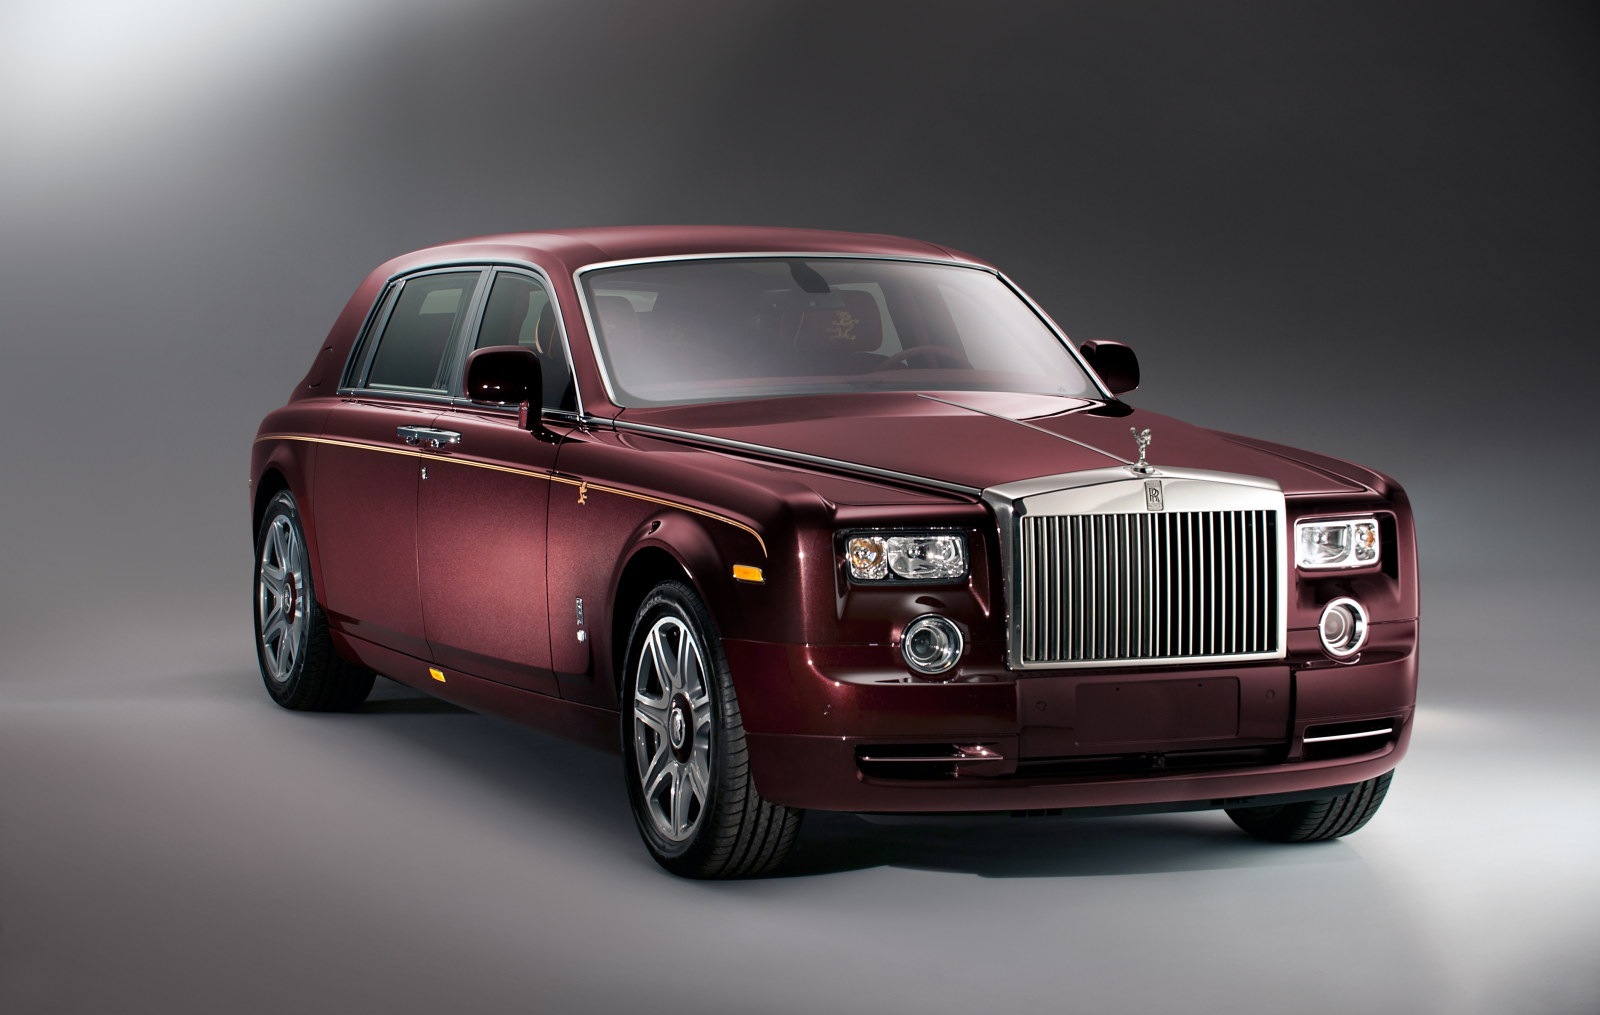 Pretul in China pentru Rolls Royce Phantom Year of the Dragon e de 1,2 milioane USD